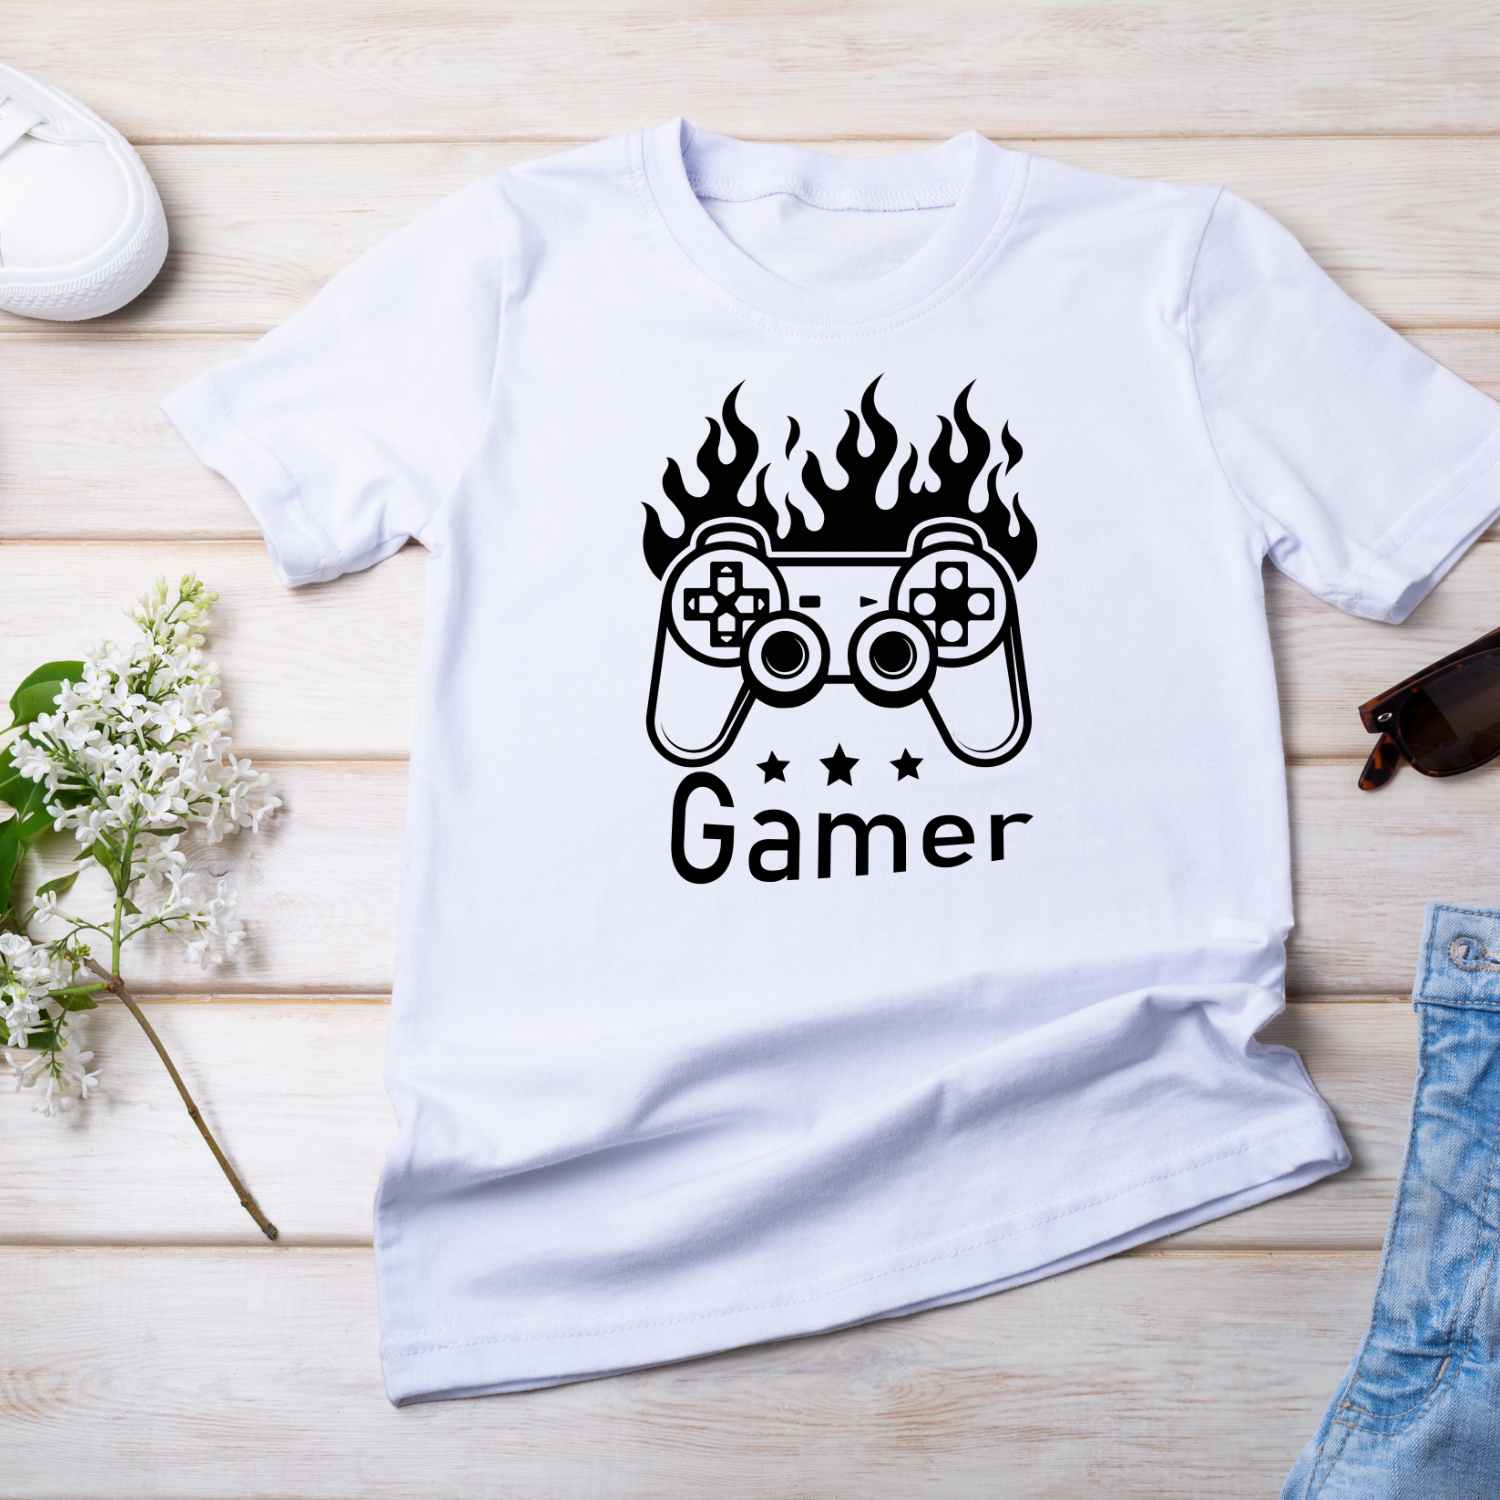 Gamer - Game Controller T-shirt Design